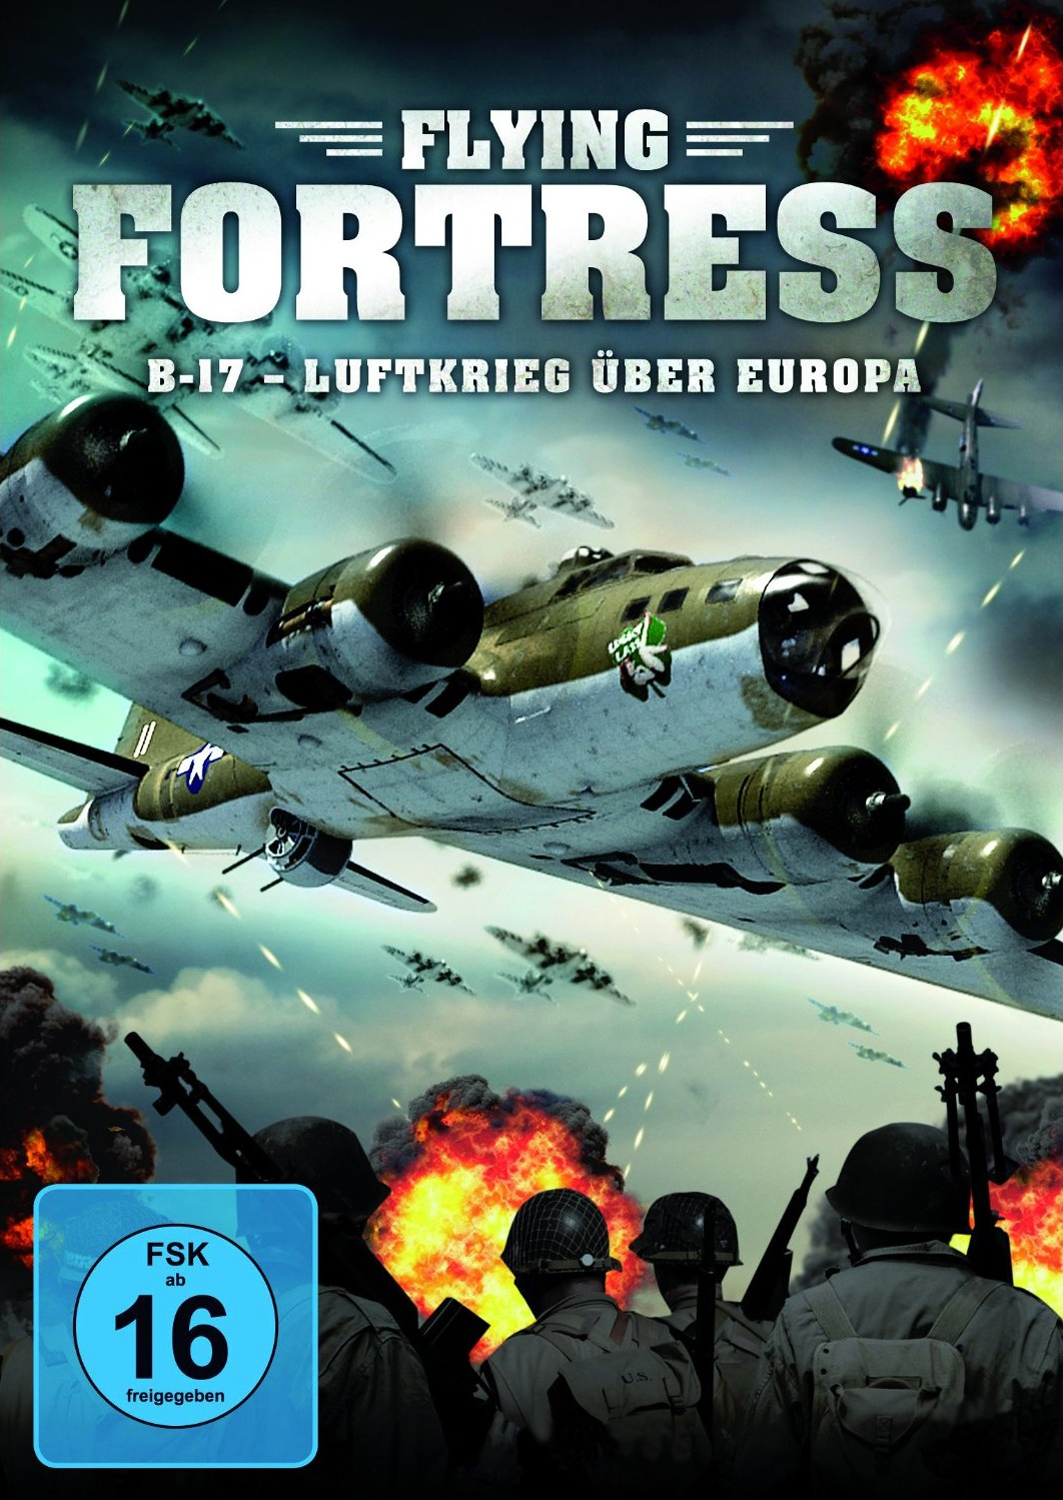 flyting-fortresss-poster